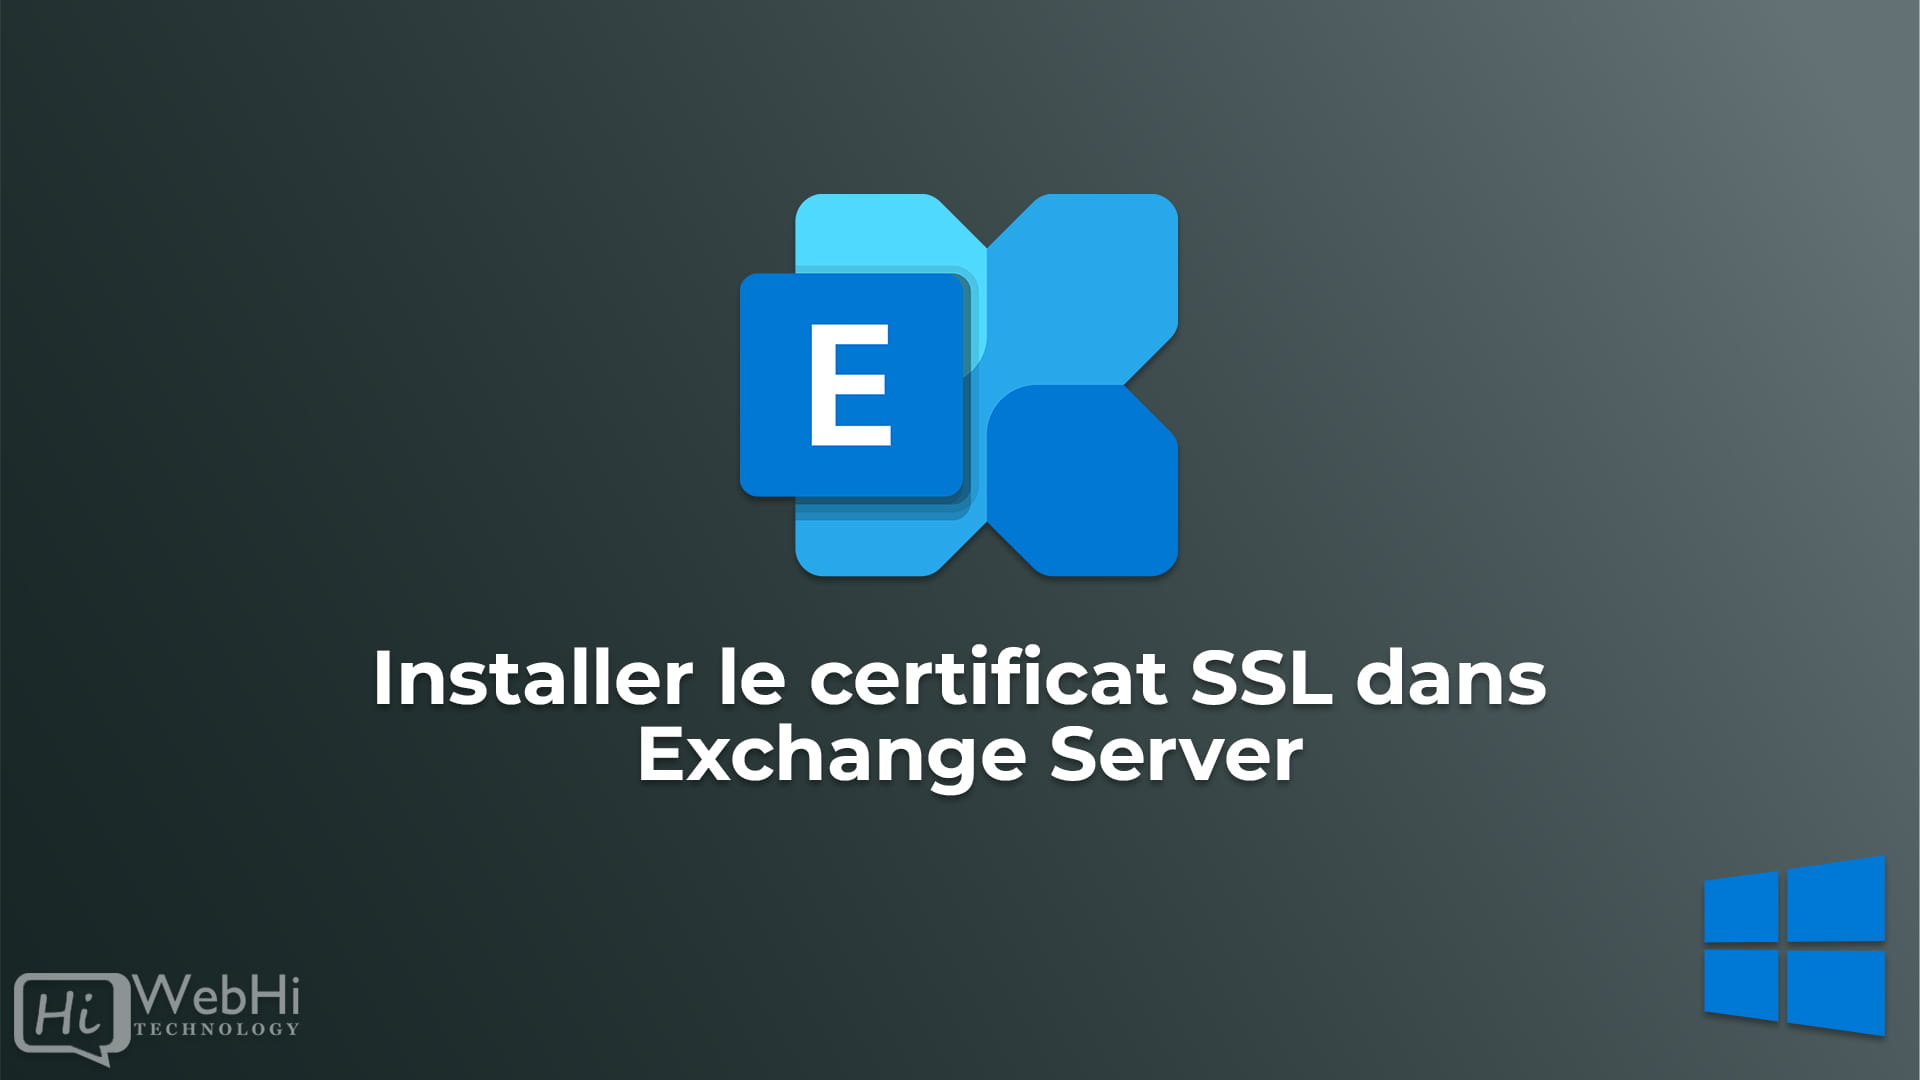 Installer et configurer certificat SSL sur serveur Microsoft Exchange